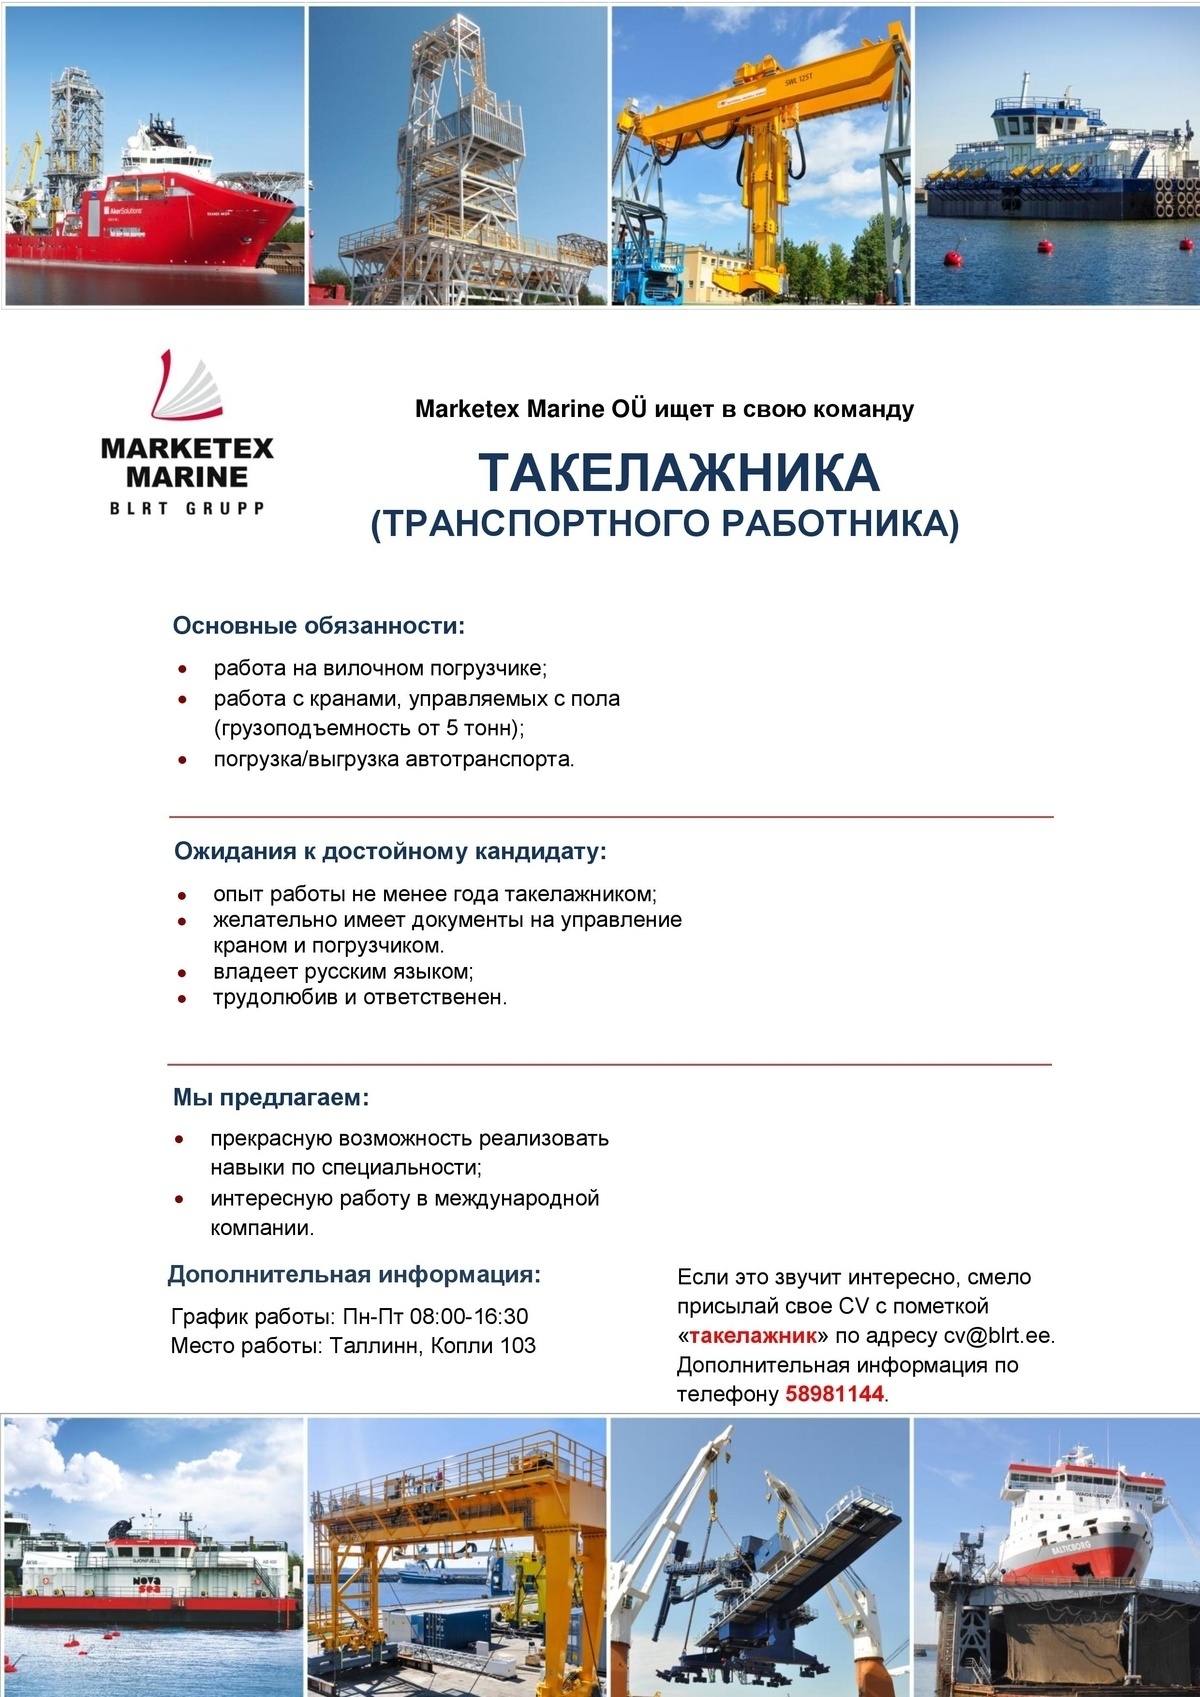 Marketex Marine OÜ ТАКЕЛАЖНИК (транспортный работник) 